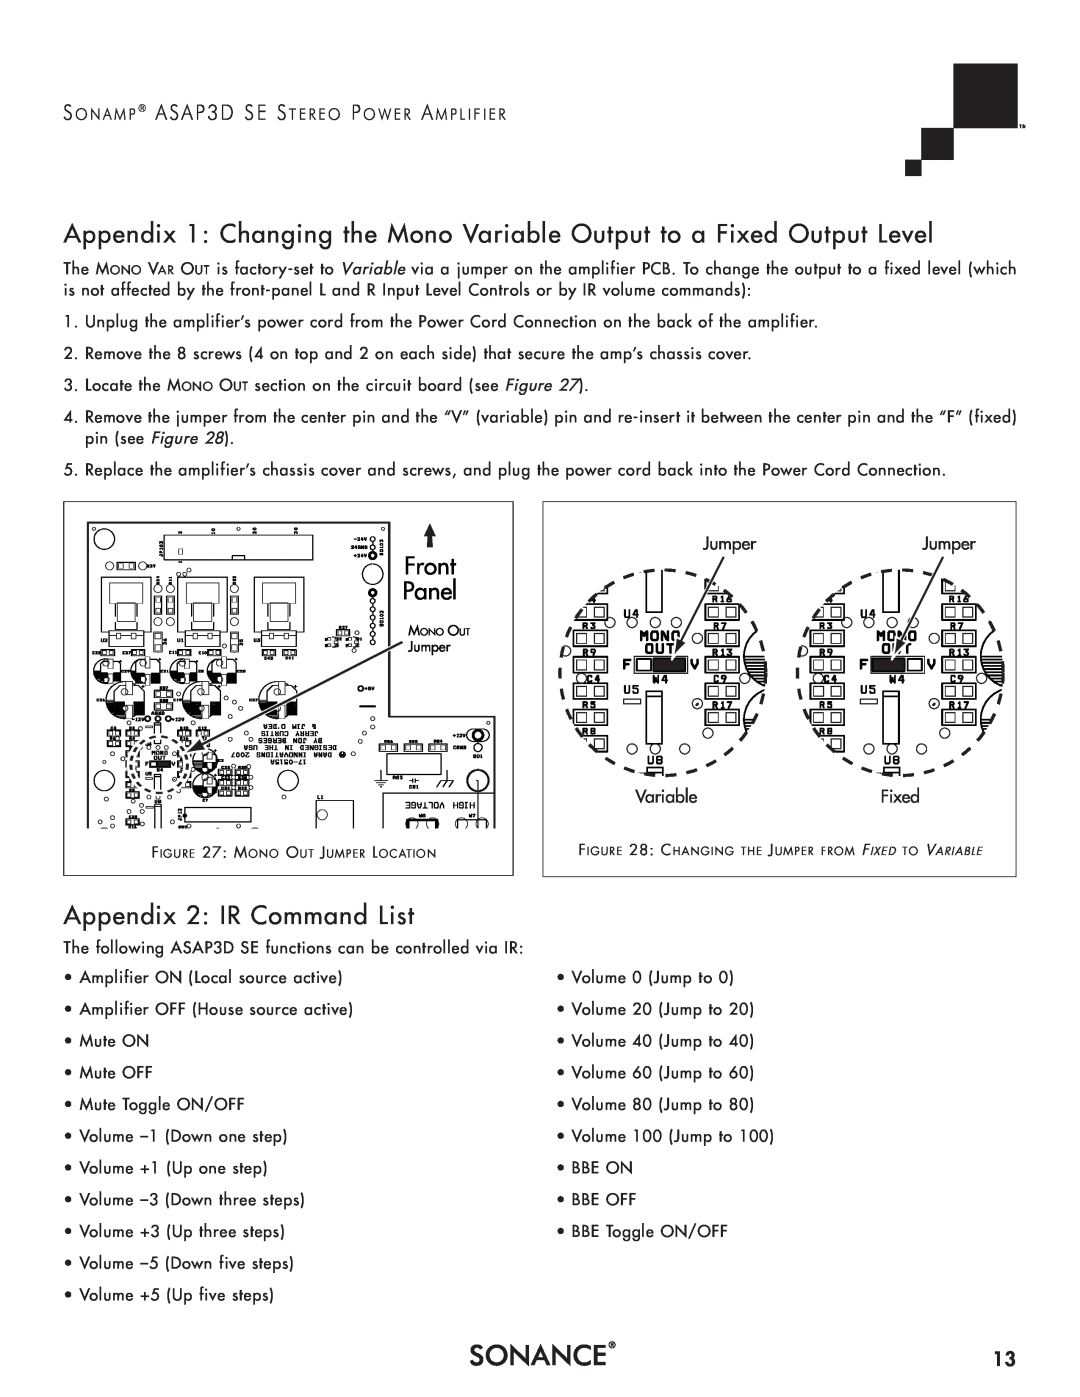 Sonance Sonamp ASAP3D SE Stereo Power Amplifier Appendix 2: IR Command List, Jumper, Variable, Fixed, Front, Panel 